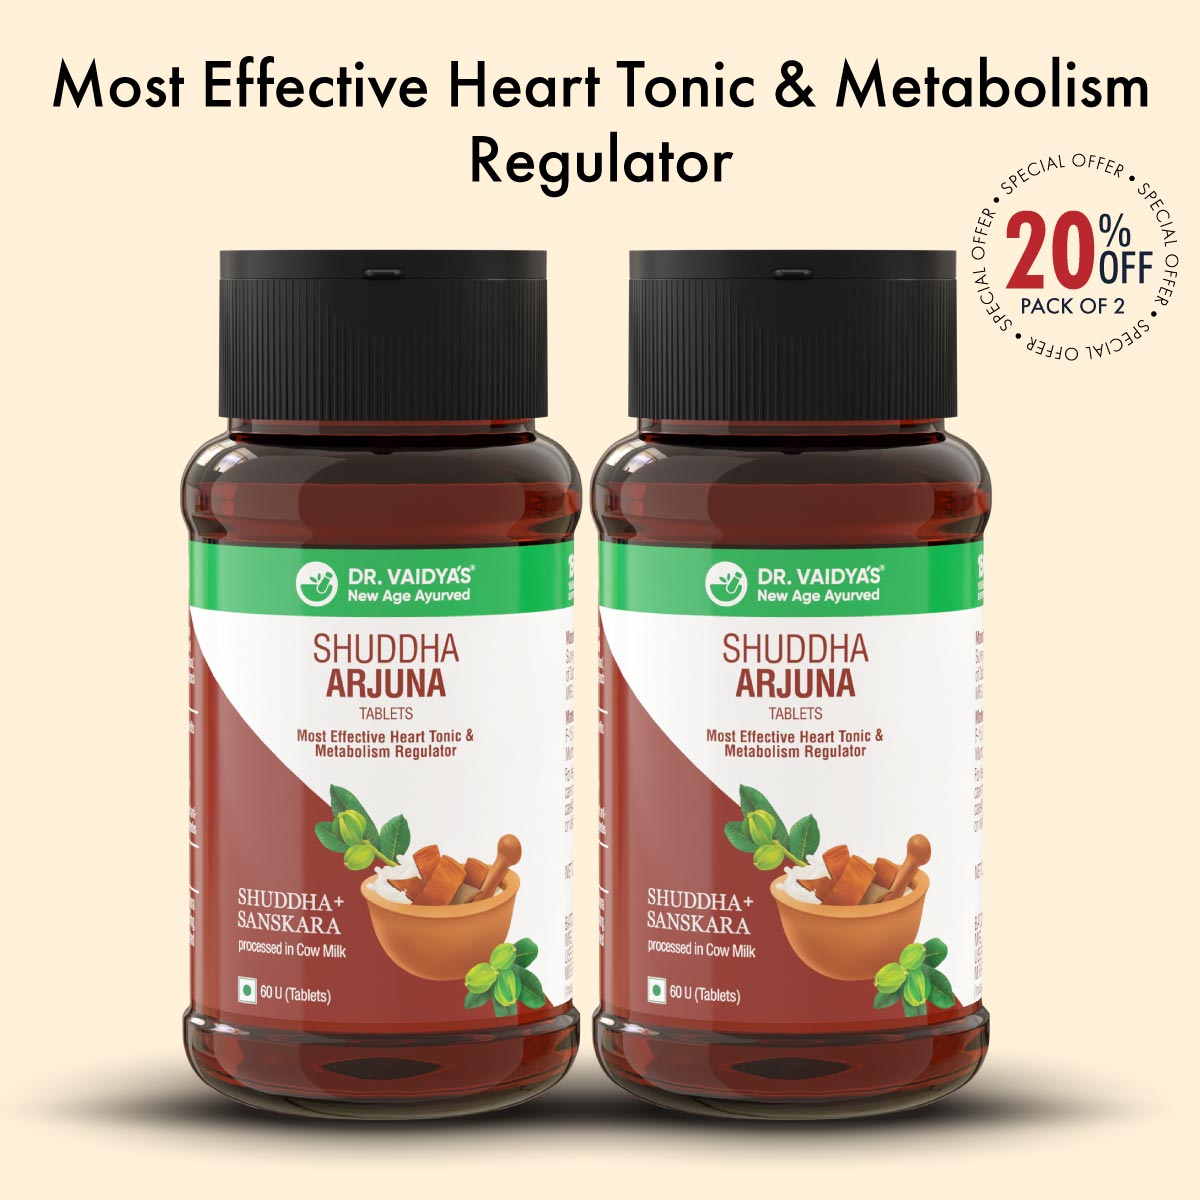 Shuddha Arjuna: Most Effective Heart Tonic & Metabolism Regulator